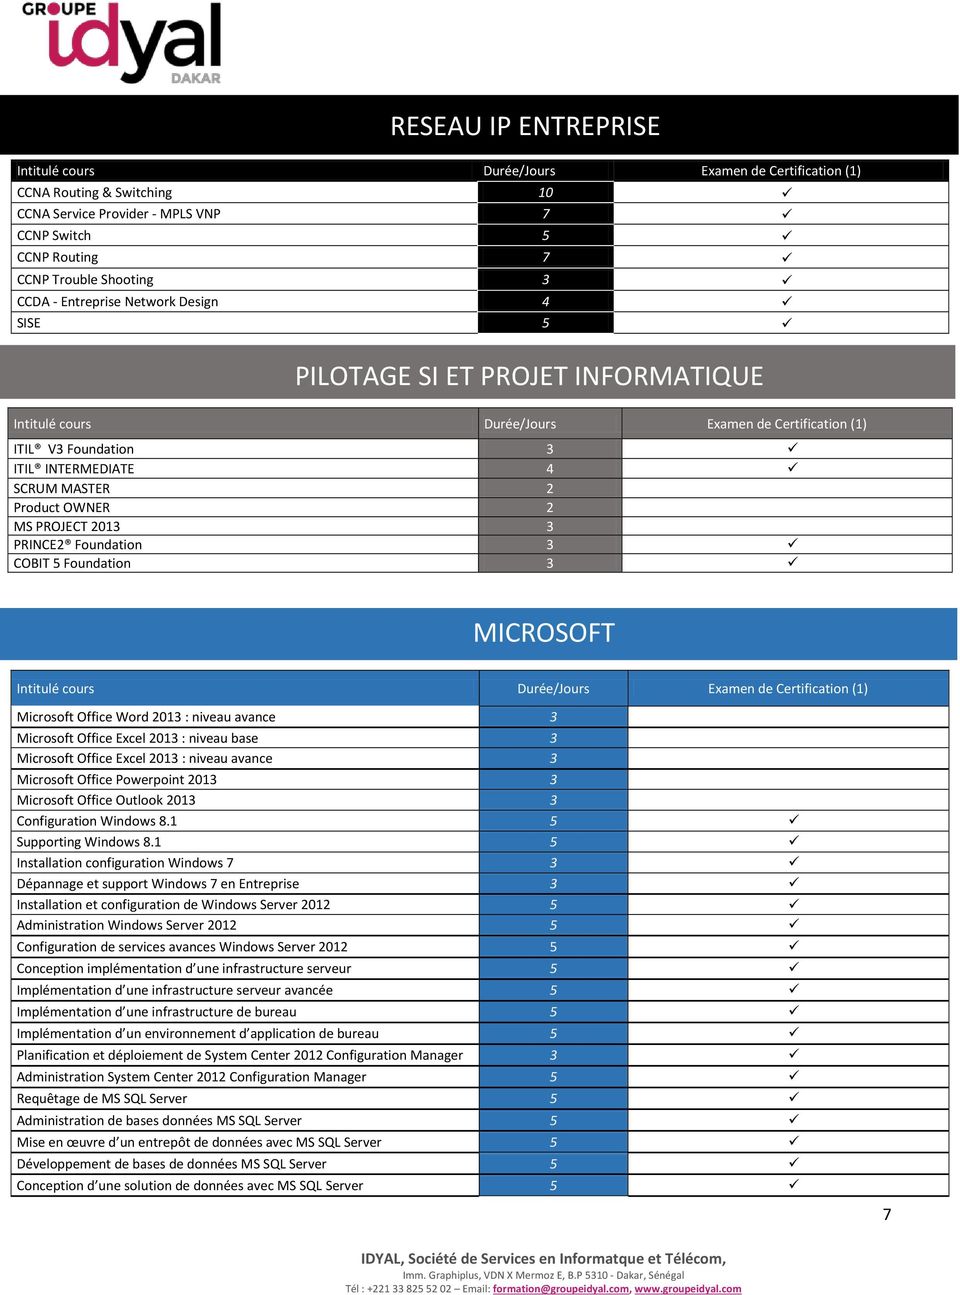 niveau avance 3 Microsoft Office Excel 2013 : niveau base 3 Microsoft Office Excel 2013 : niveau avance 3 Microsoft Office Powerpoint 2013 3 Microsoft Office Outlook 2013 3 Configuration Windows 8.